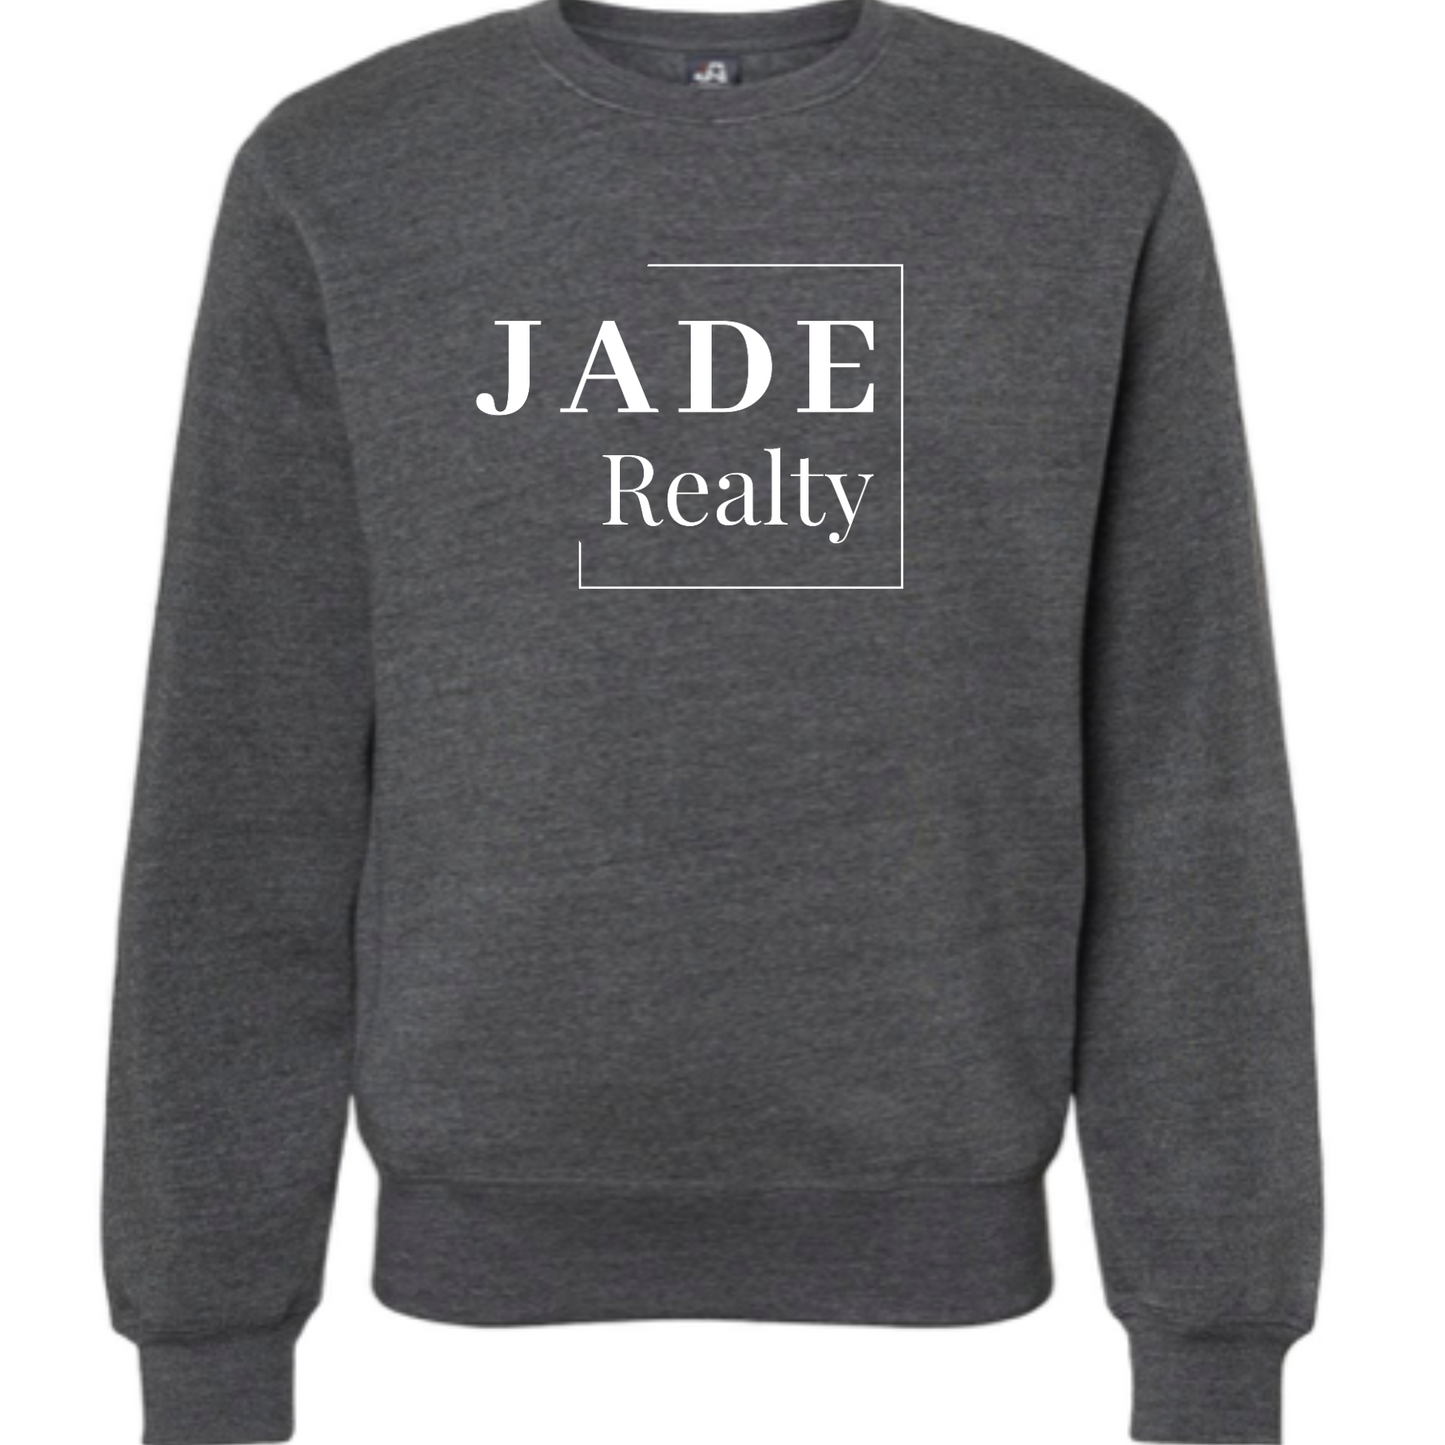 Jade Realty J. America - Triblend Fleece Crewneck Sweatshirt